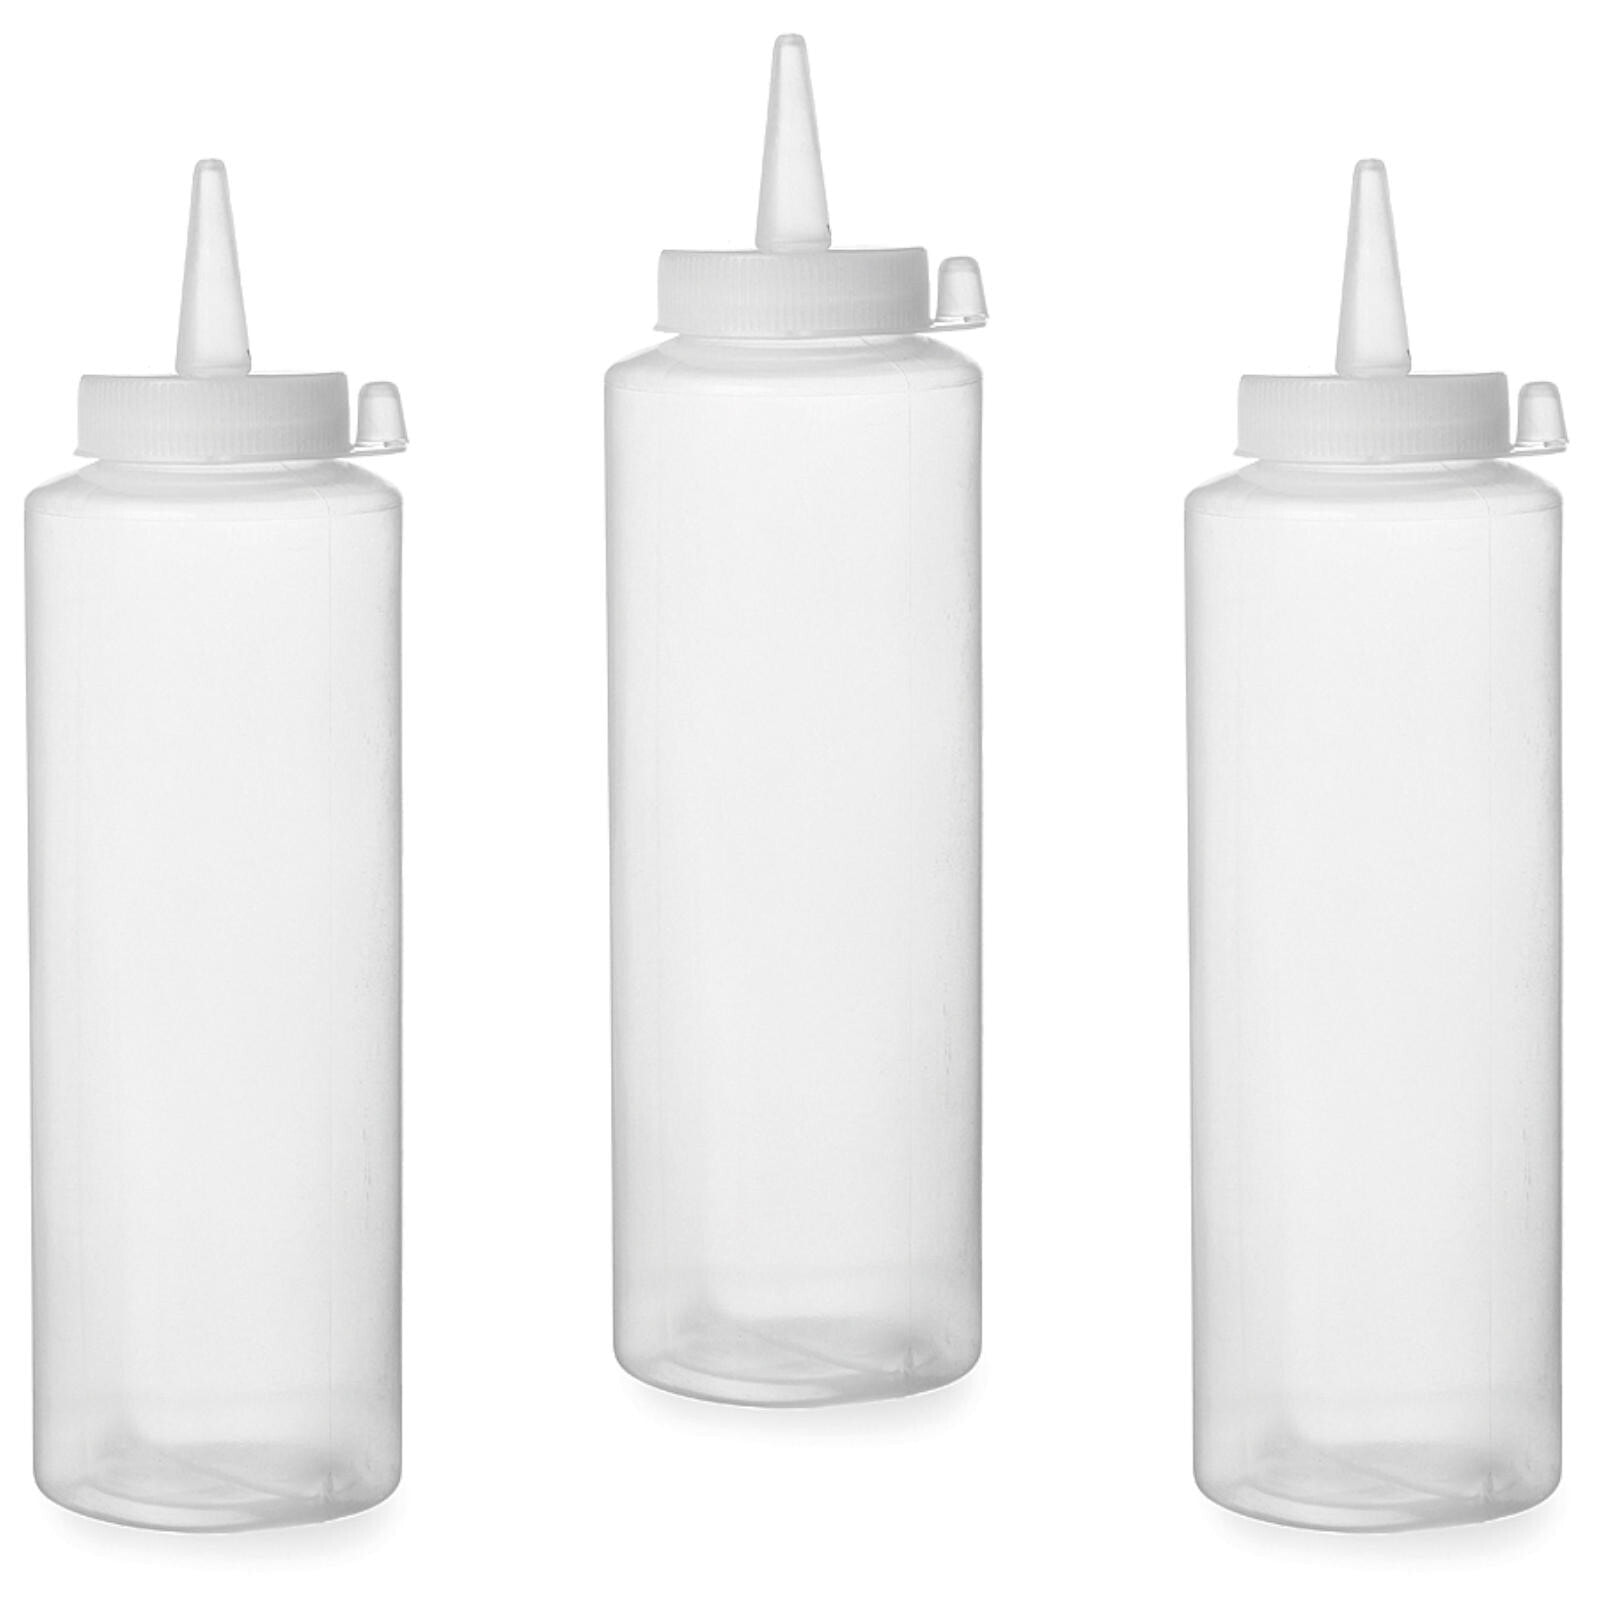 Cold sauce dispenser, set of 3 - transparent 0.7L - HENDI 557952